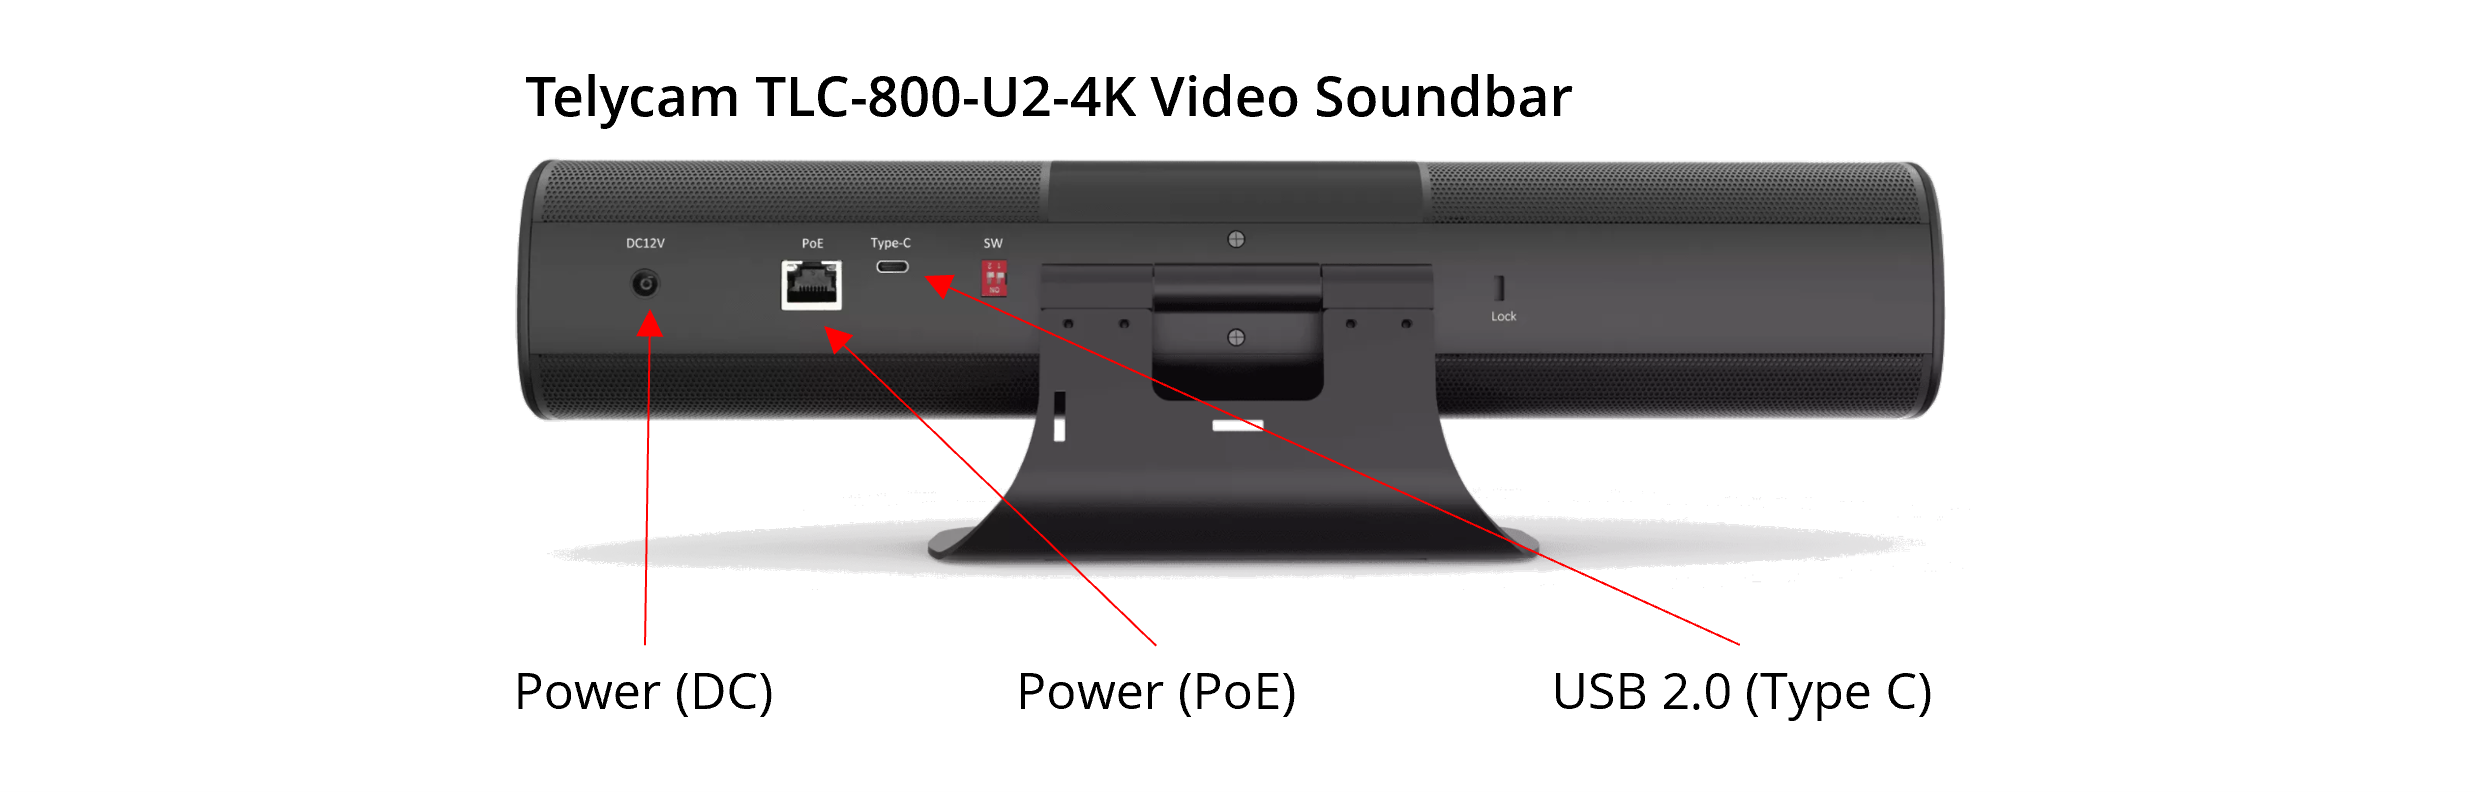 Telycam TLC-800-U2-4K | All-in-One Video Soundbar | 4K | Field of View | 4x Zoom | PoE Small to Rooms